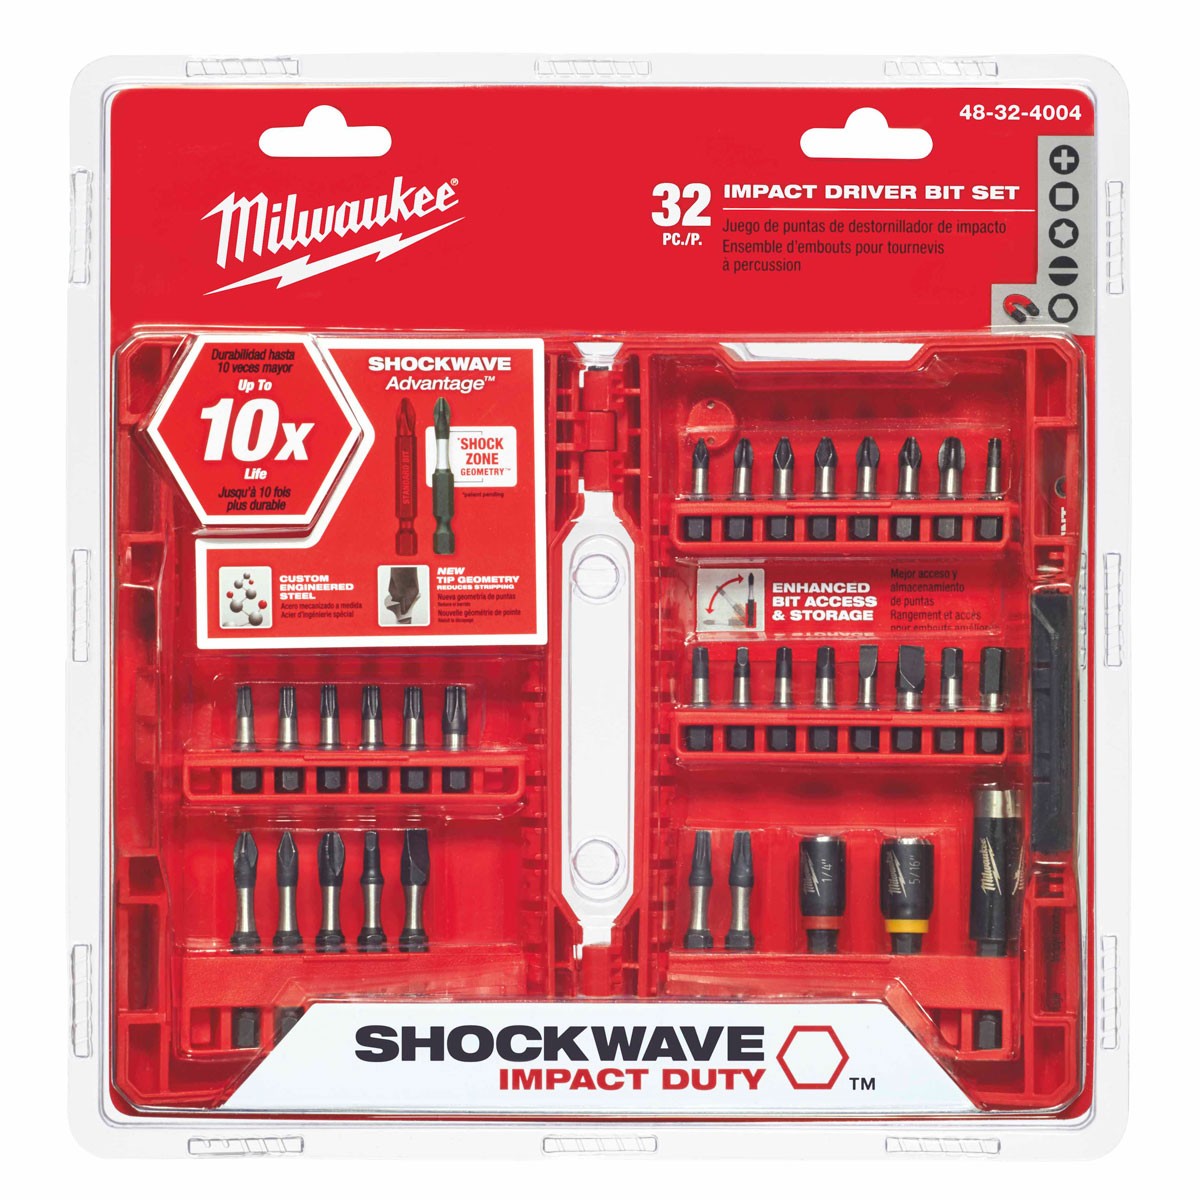 MILWAUKEE,MILWAUKEE SHOCKWAVE 9PC 1 HEX BIT SET,1-828-48324616,KBC Tools &  Machinery